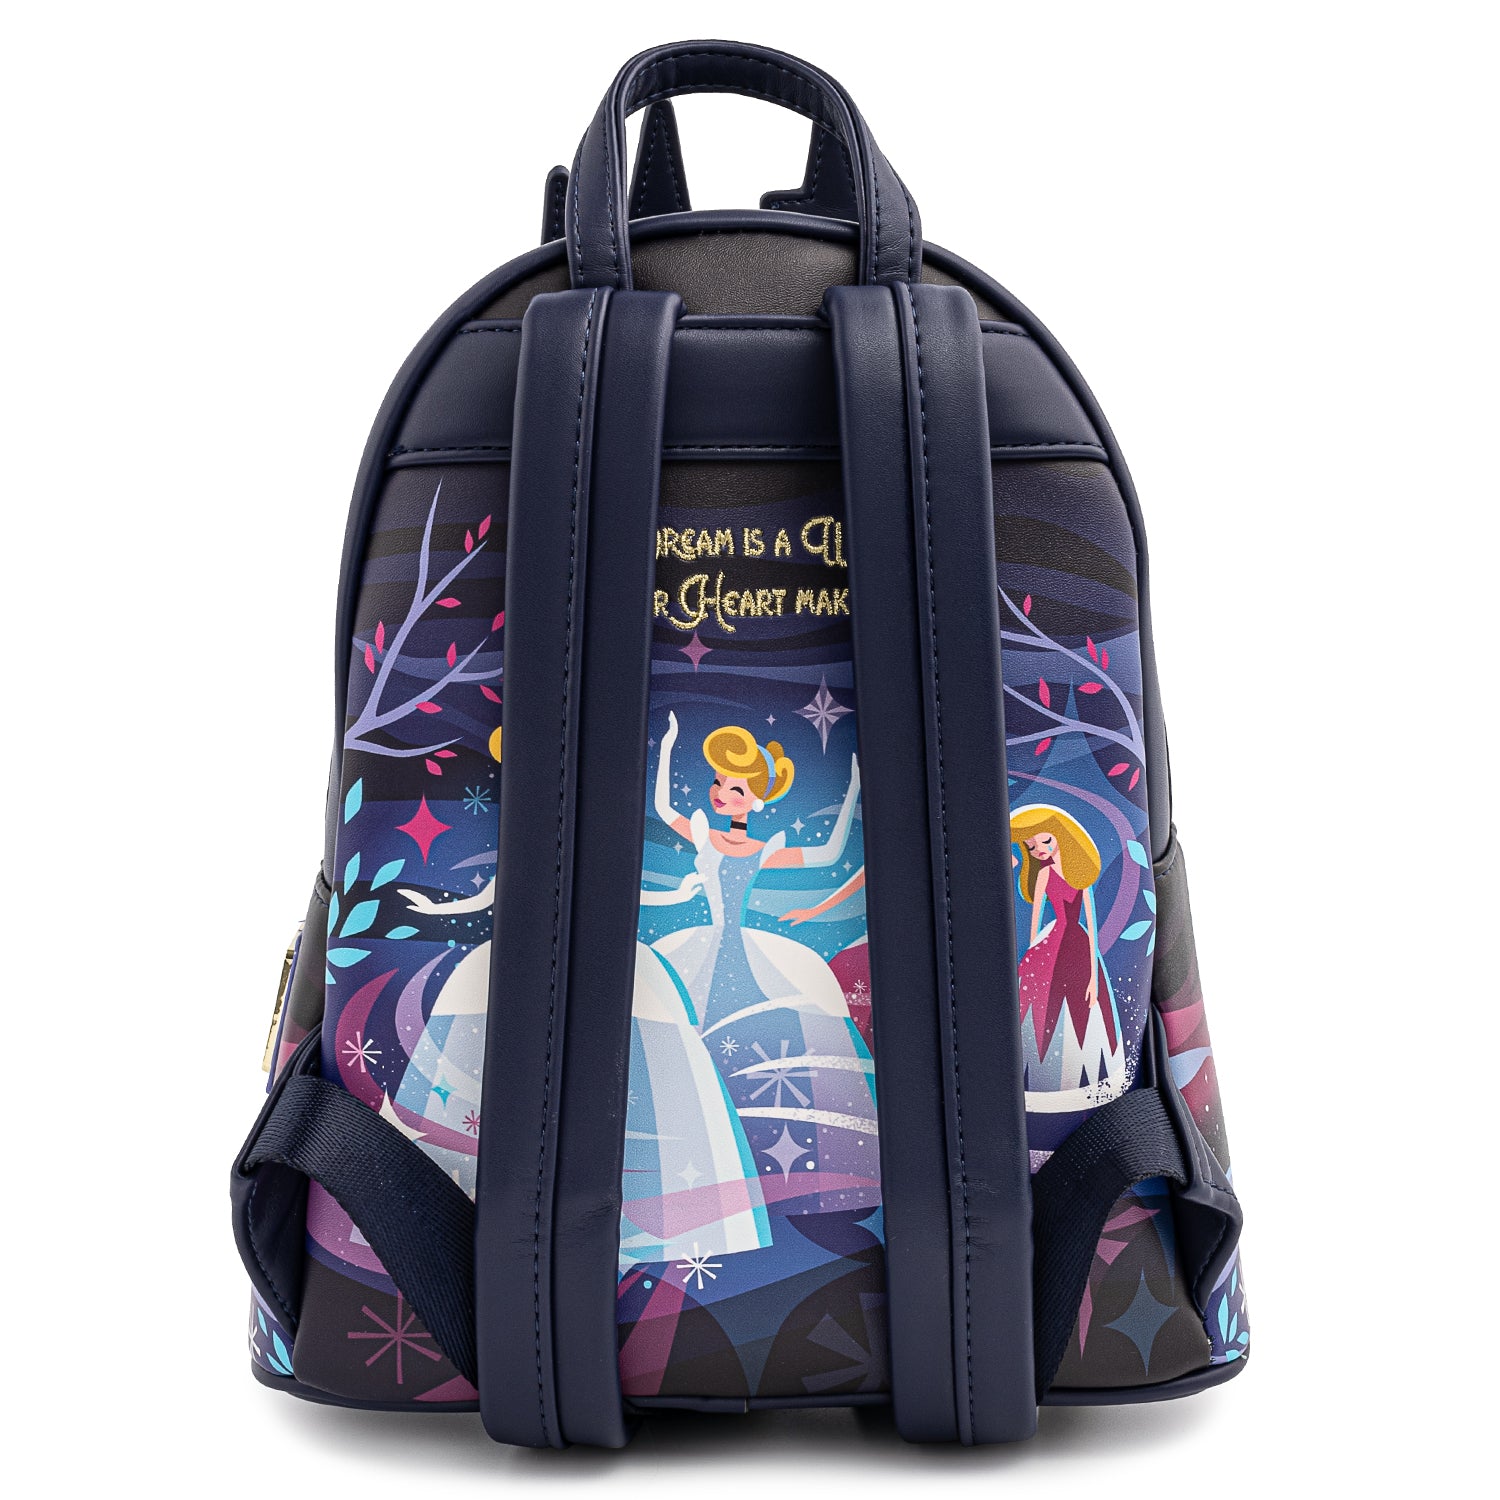 Loungefly Disney Cinderella Castle Mini Backpack Glow in the Dark Bag